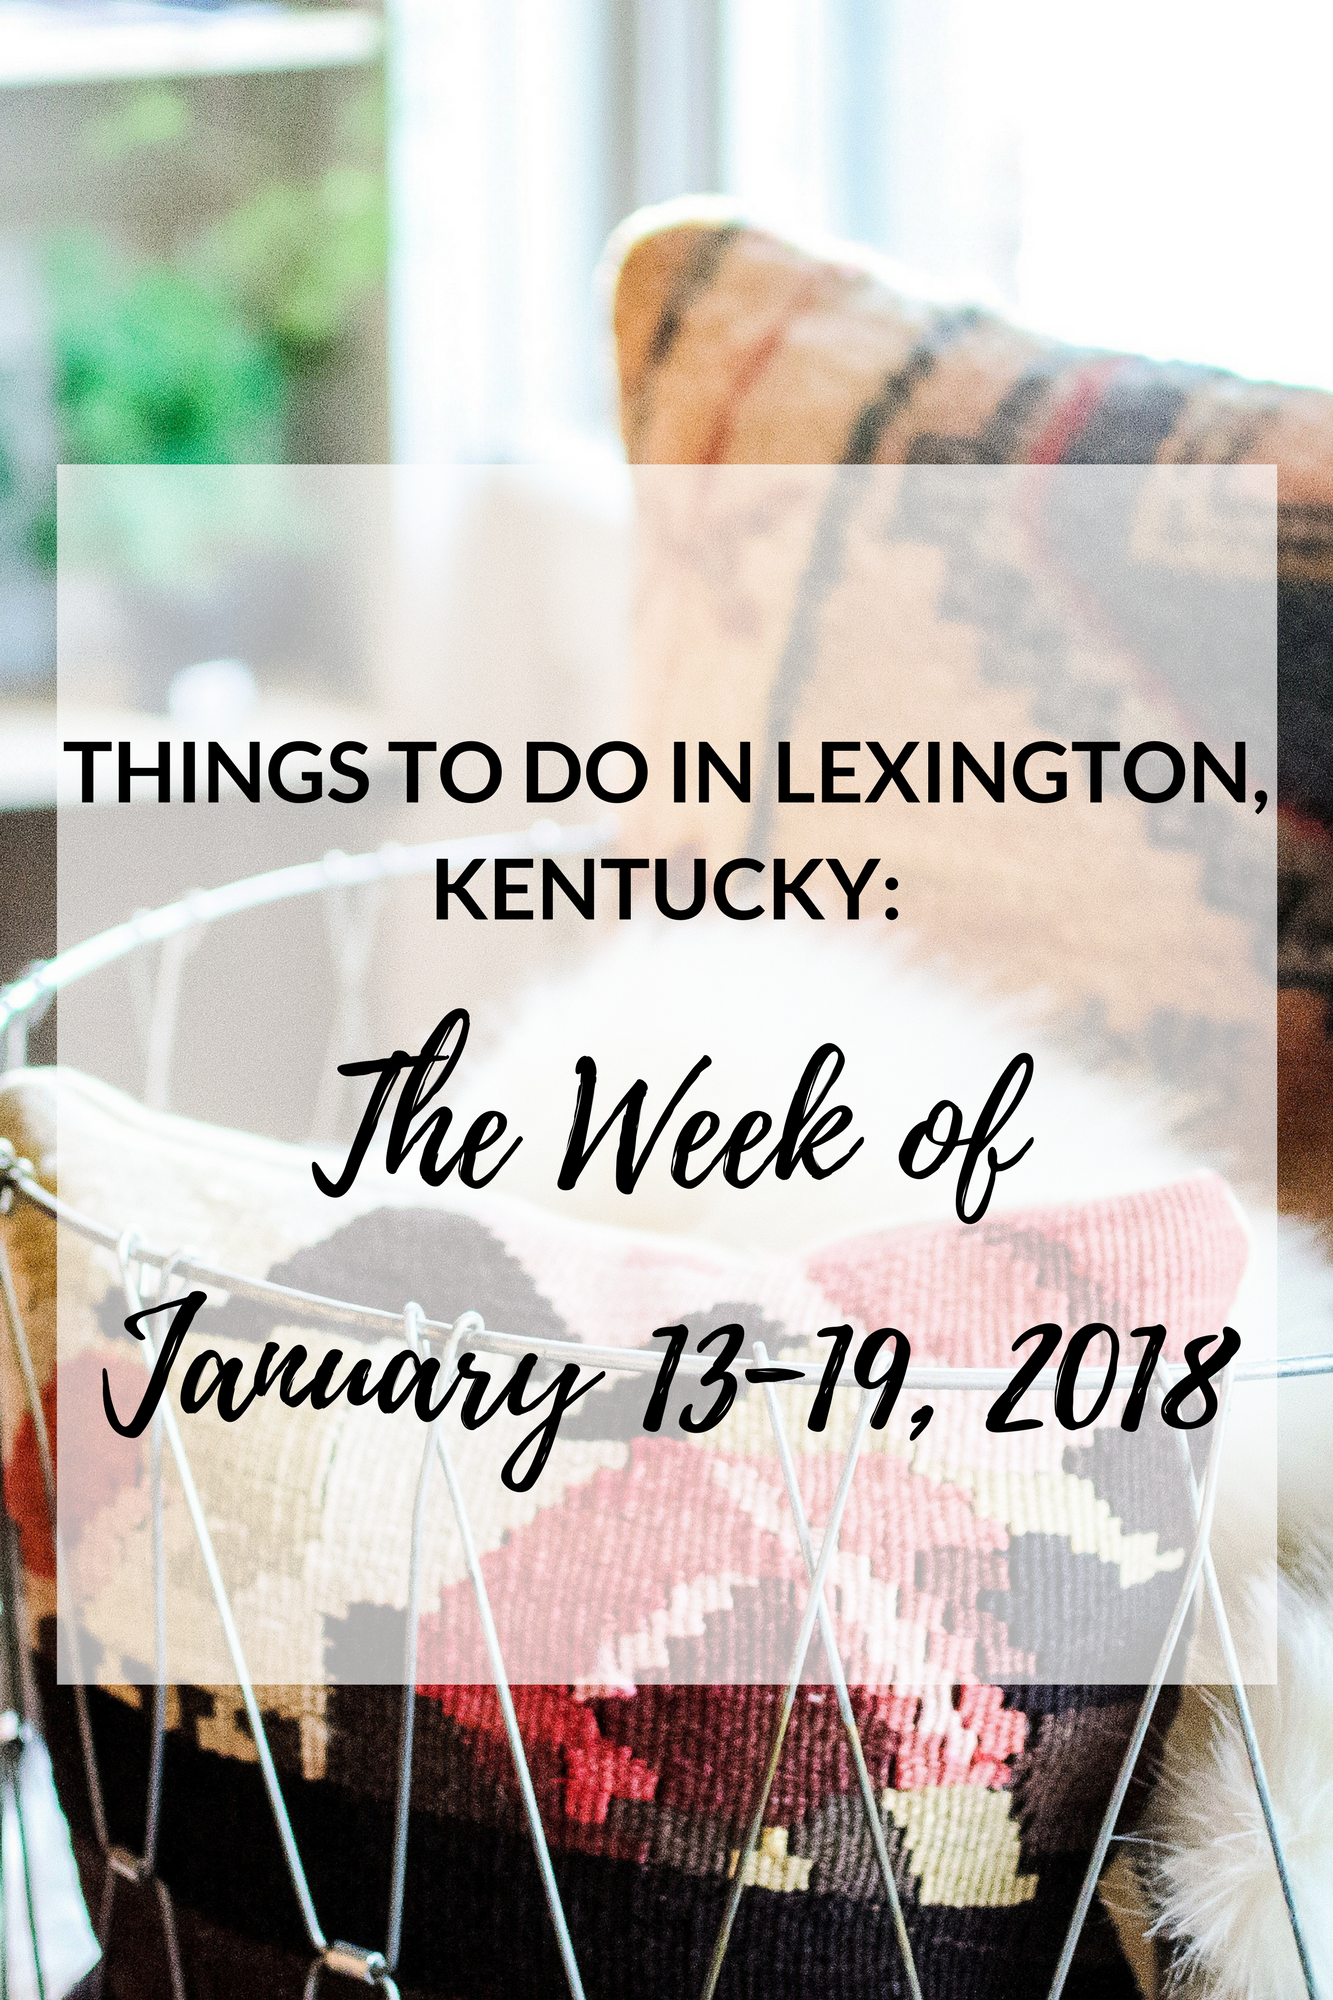 Things to Do Lexington Kentucky January 13-19, 2018